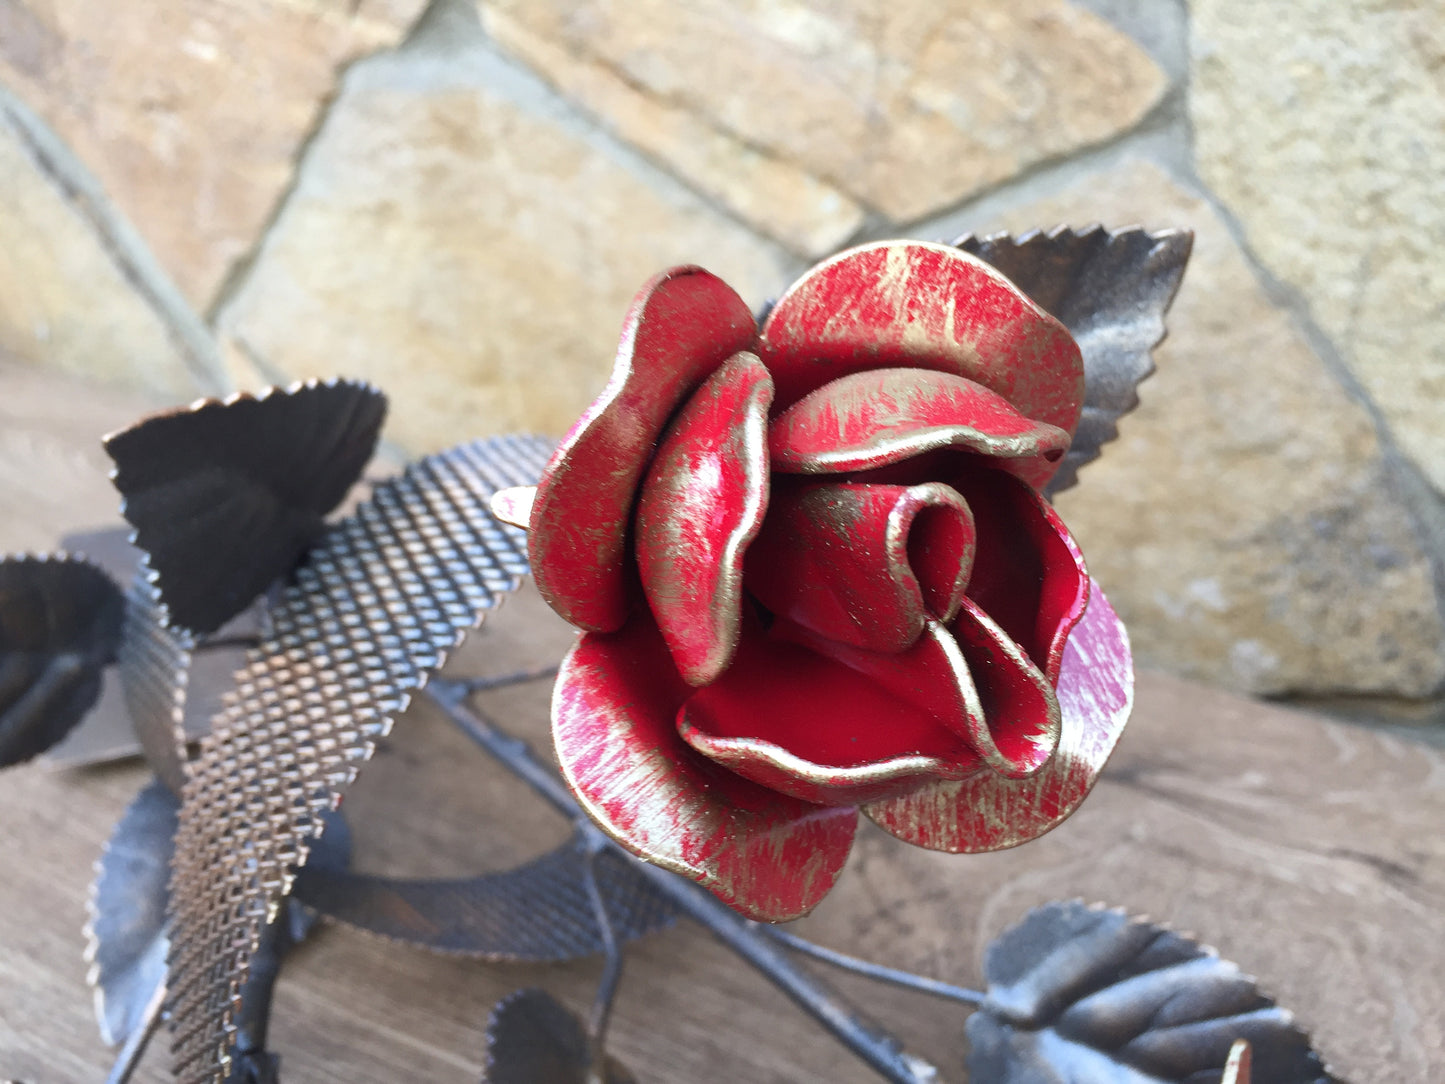 Metal rose, 6th anniversary gift, iron anniversary, hand forged rose, metal artwork, iron rose, metal roses, forged rose, iron gift for her